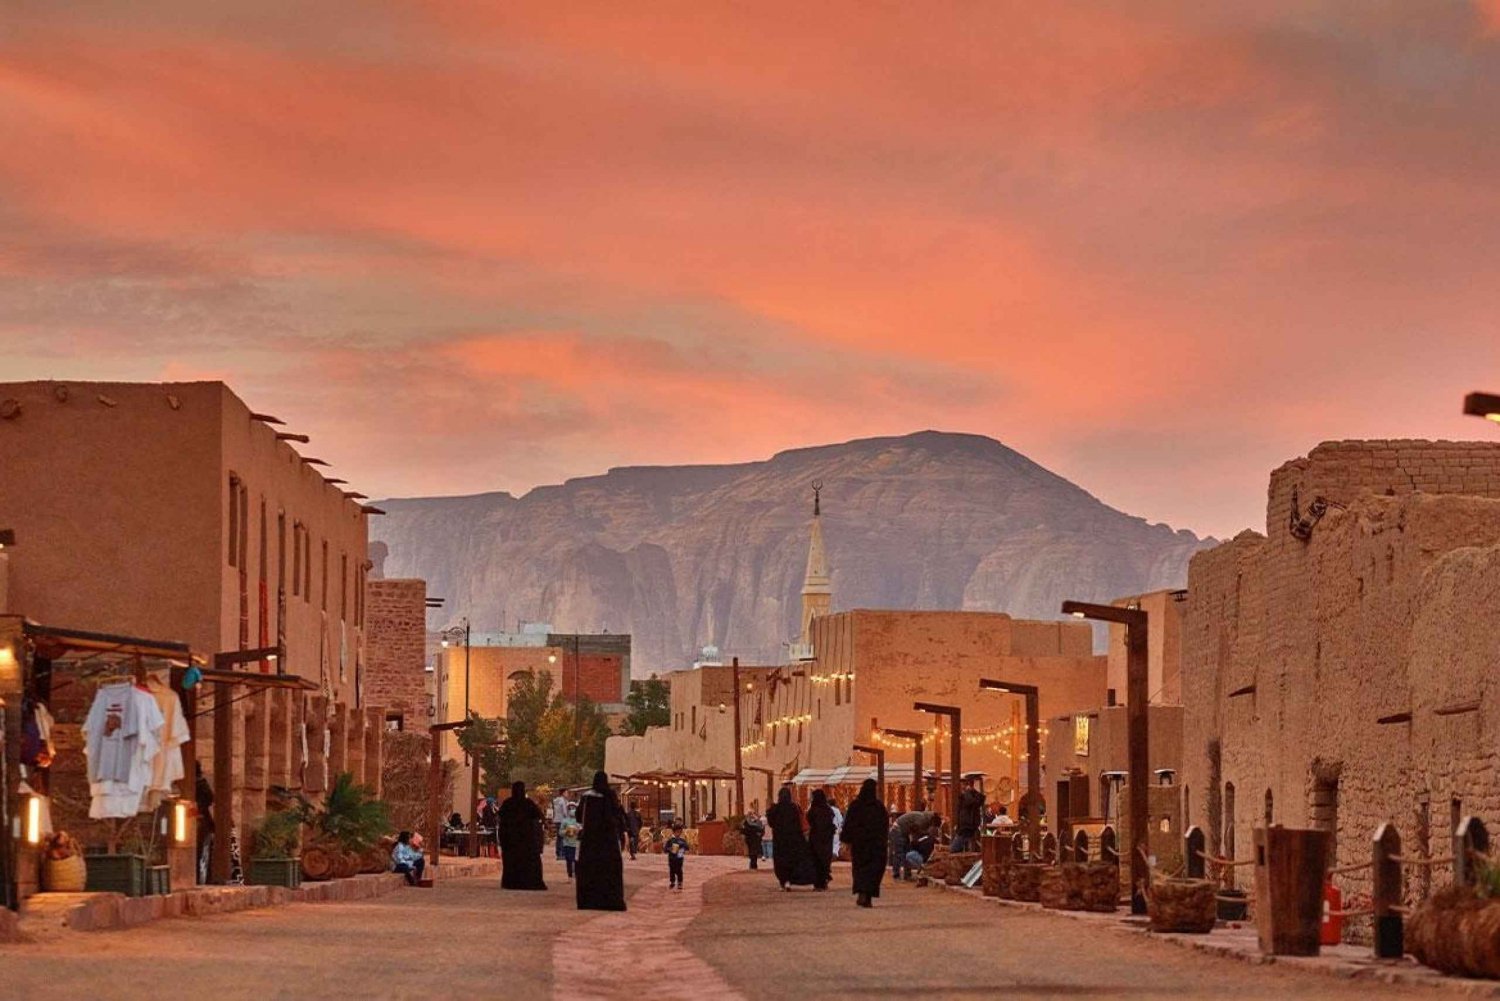 A tourist trip to visit the Saudi heritage city of AlUla